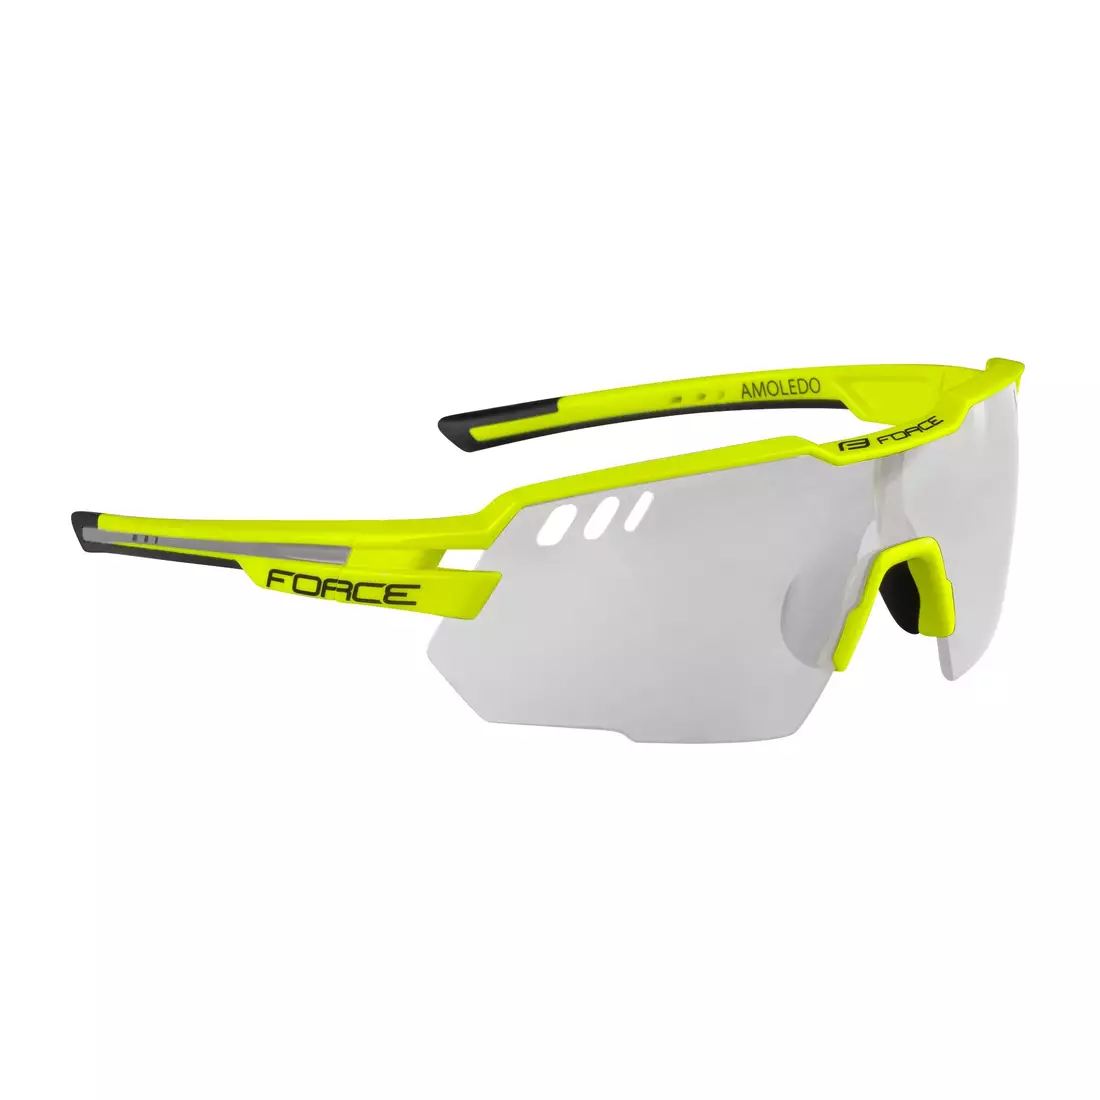 FORCE AMOLEDO Photochromic bicycle / sports glasses yellow fluorine 910852